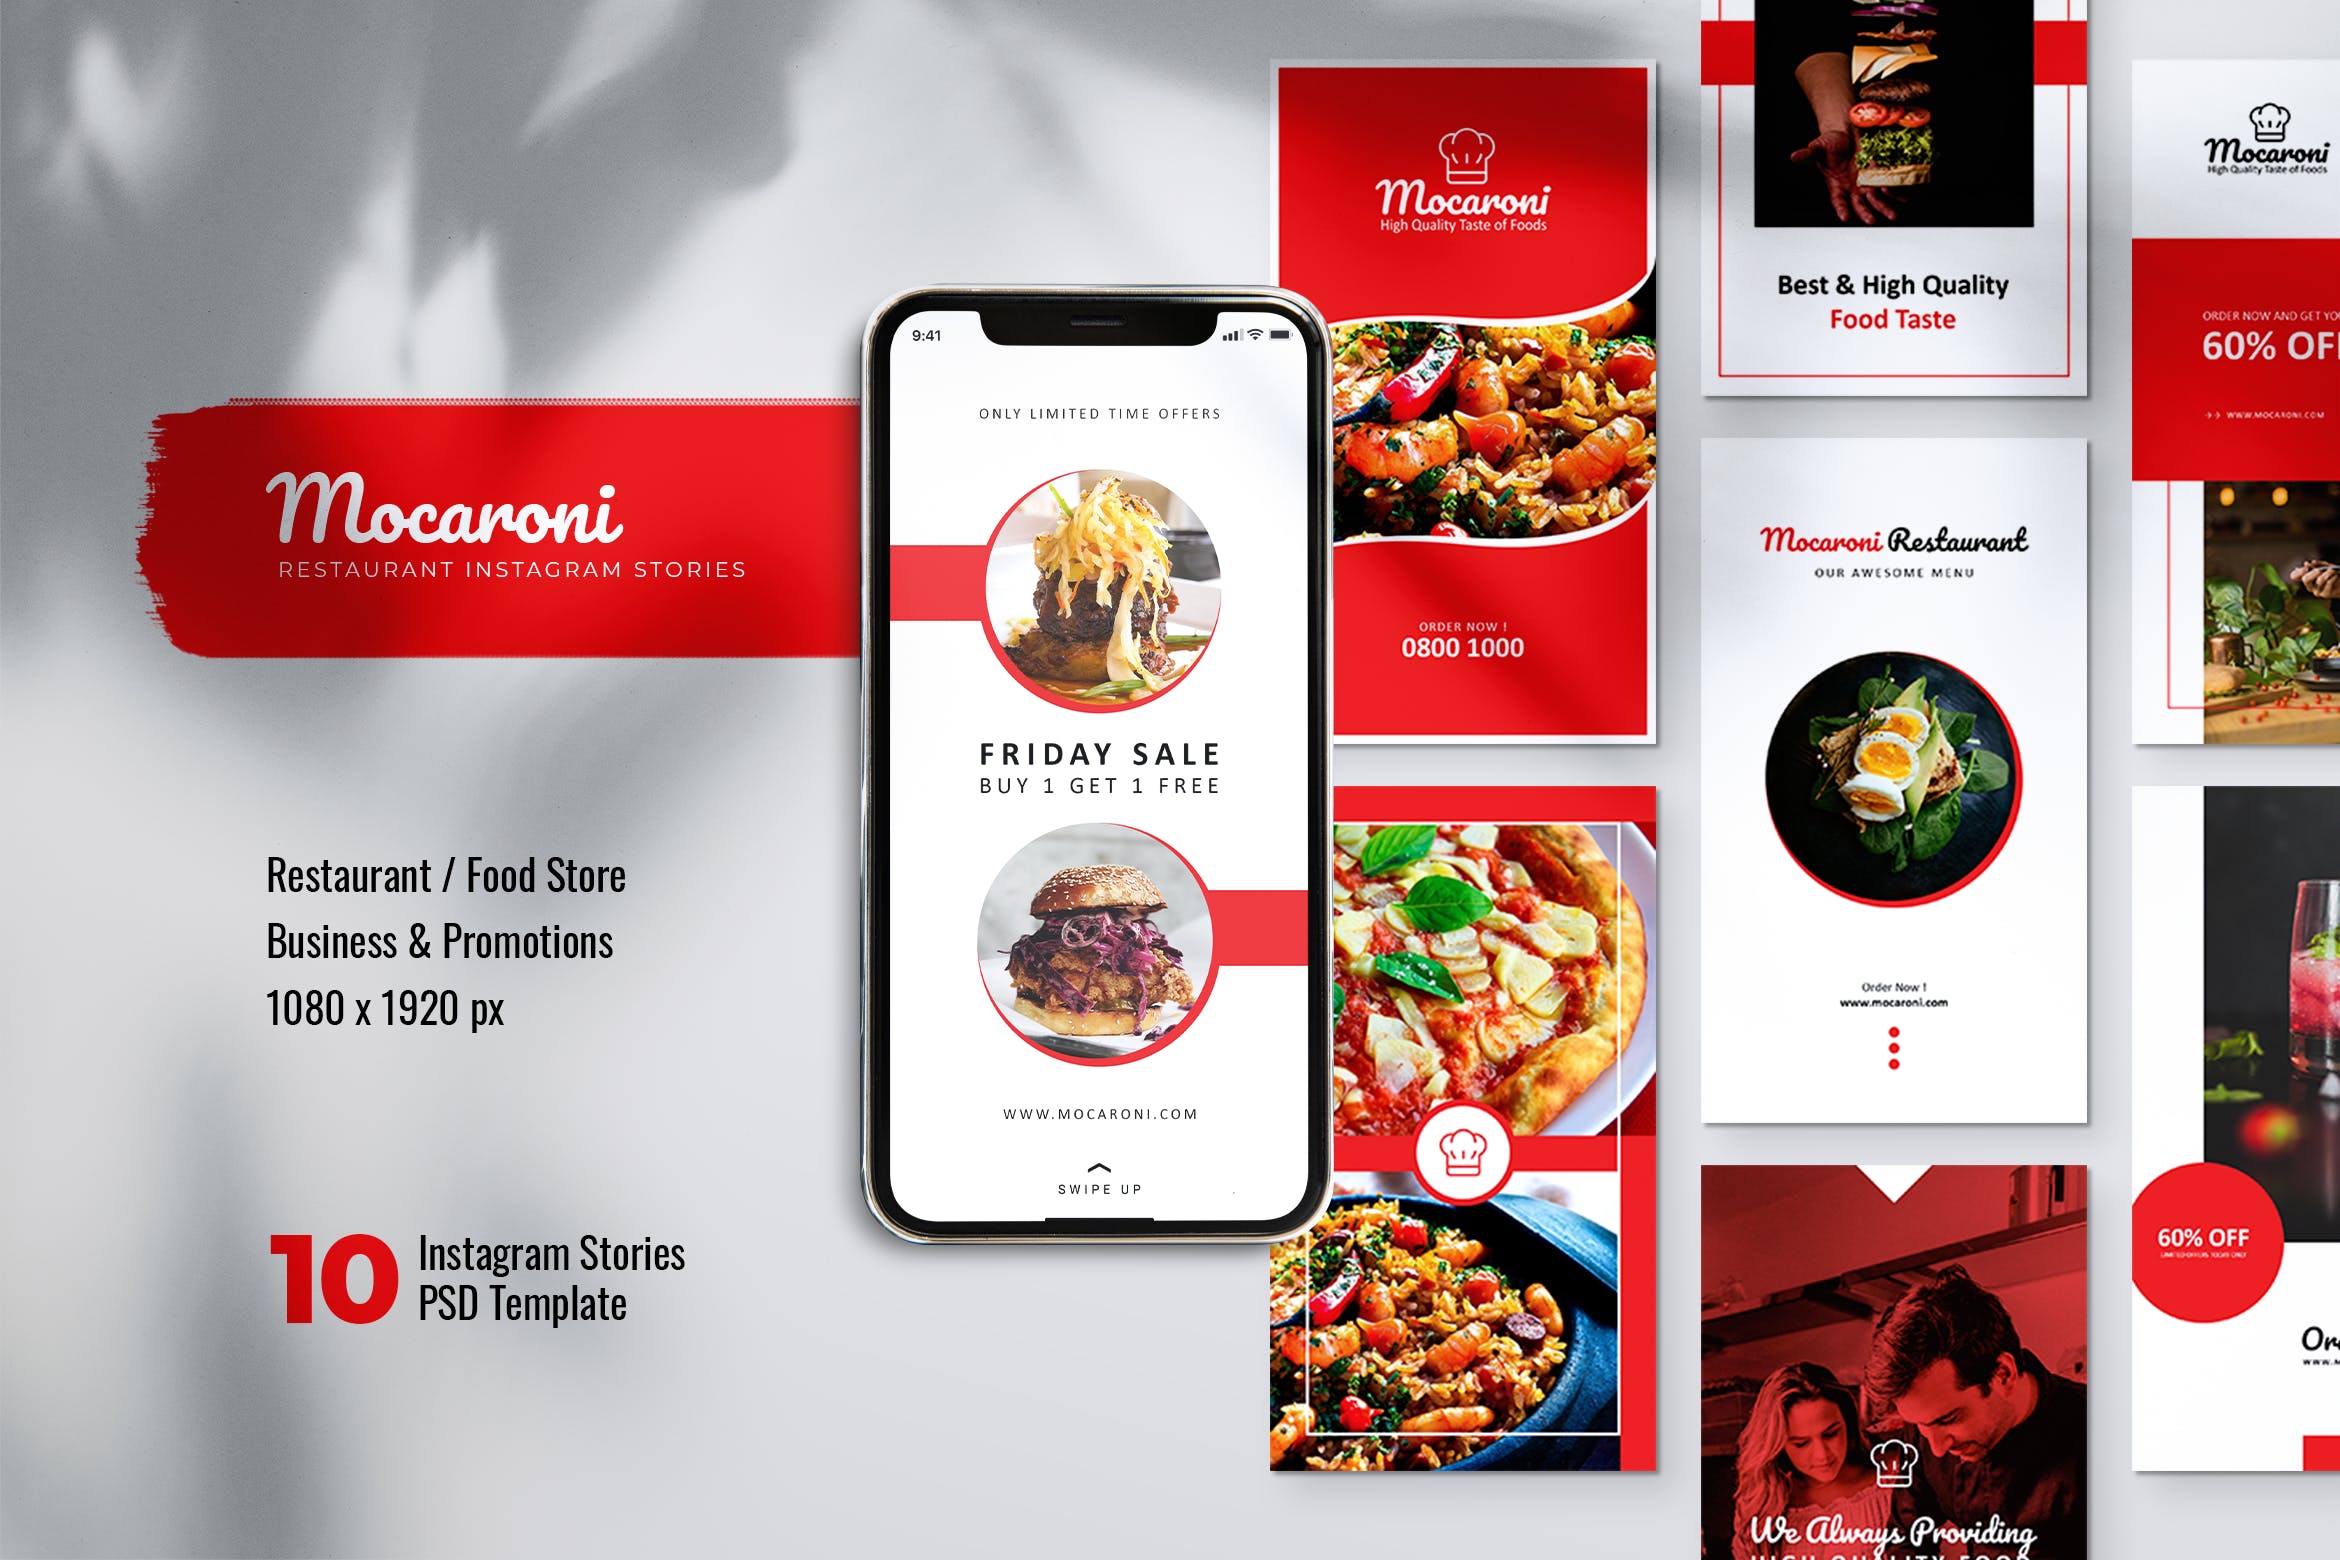 餐馆美食主题Instagram&Facebook社交品牌宣传图片设计PSD模板16图库精选 MOCARONI Restaurant/Food Store Instagram Stories插图